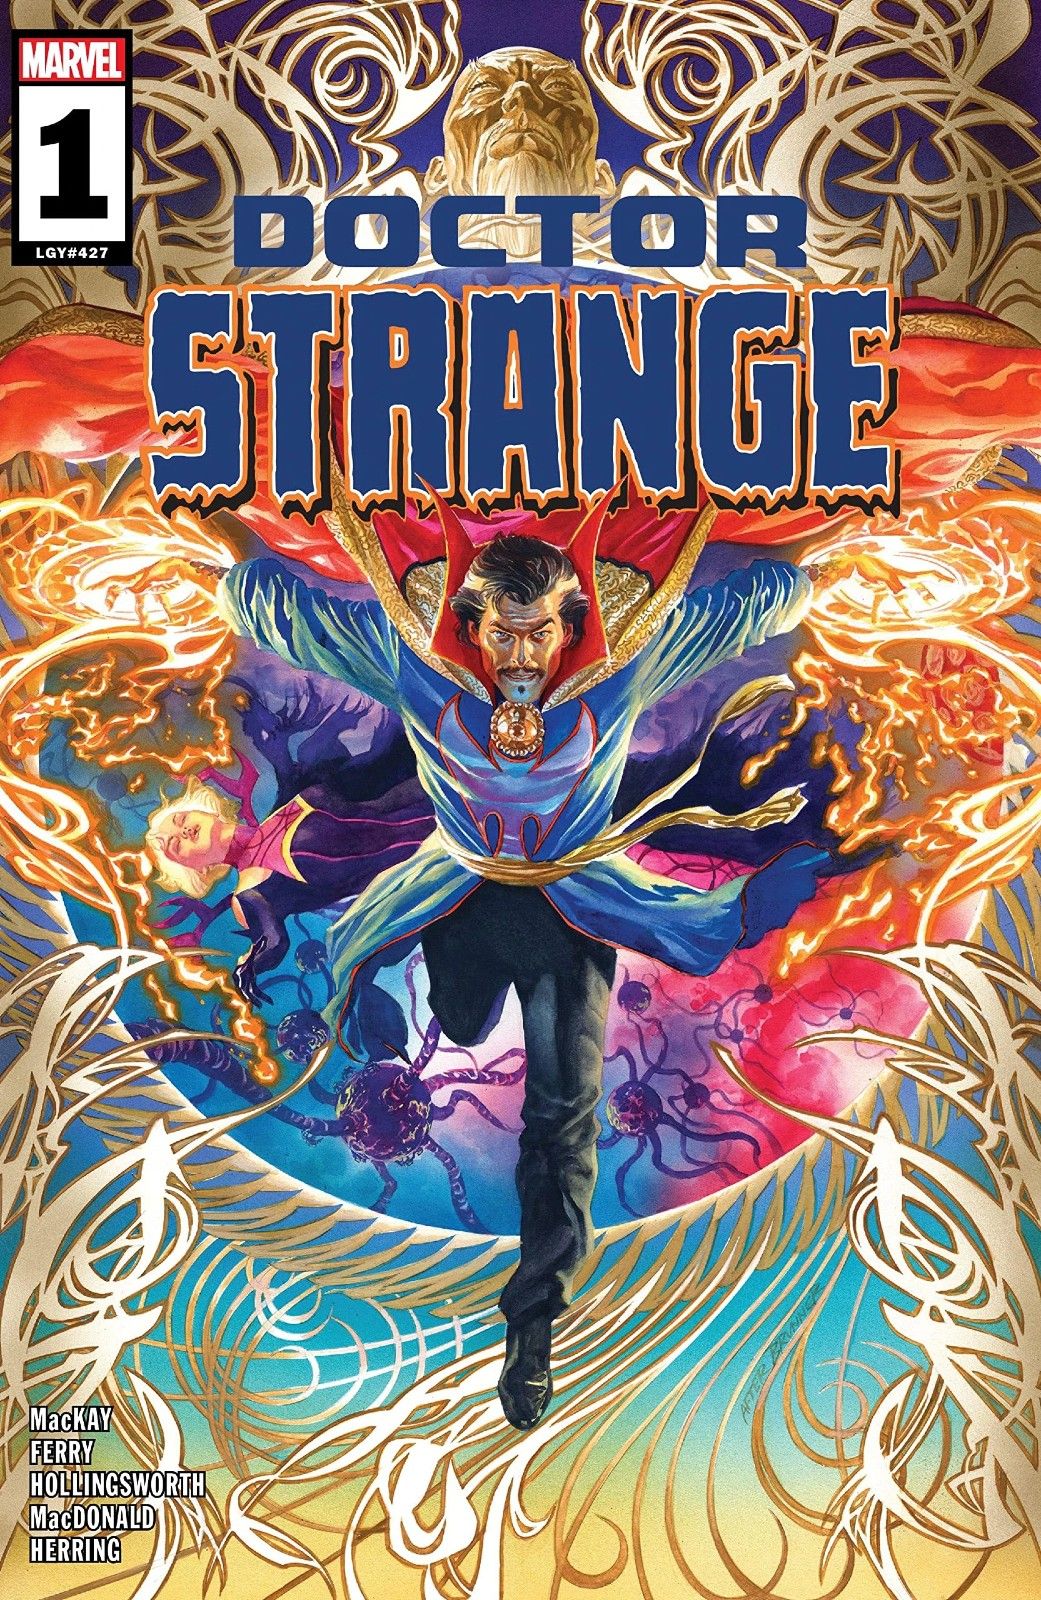 Stephen Strange uses his mystic powers in Doctor Strange (Vol. 6) #1 by Marvel Comics